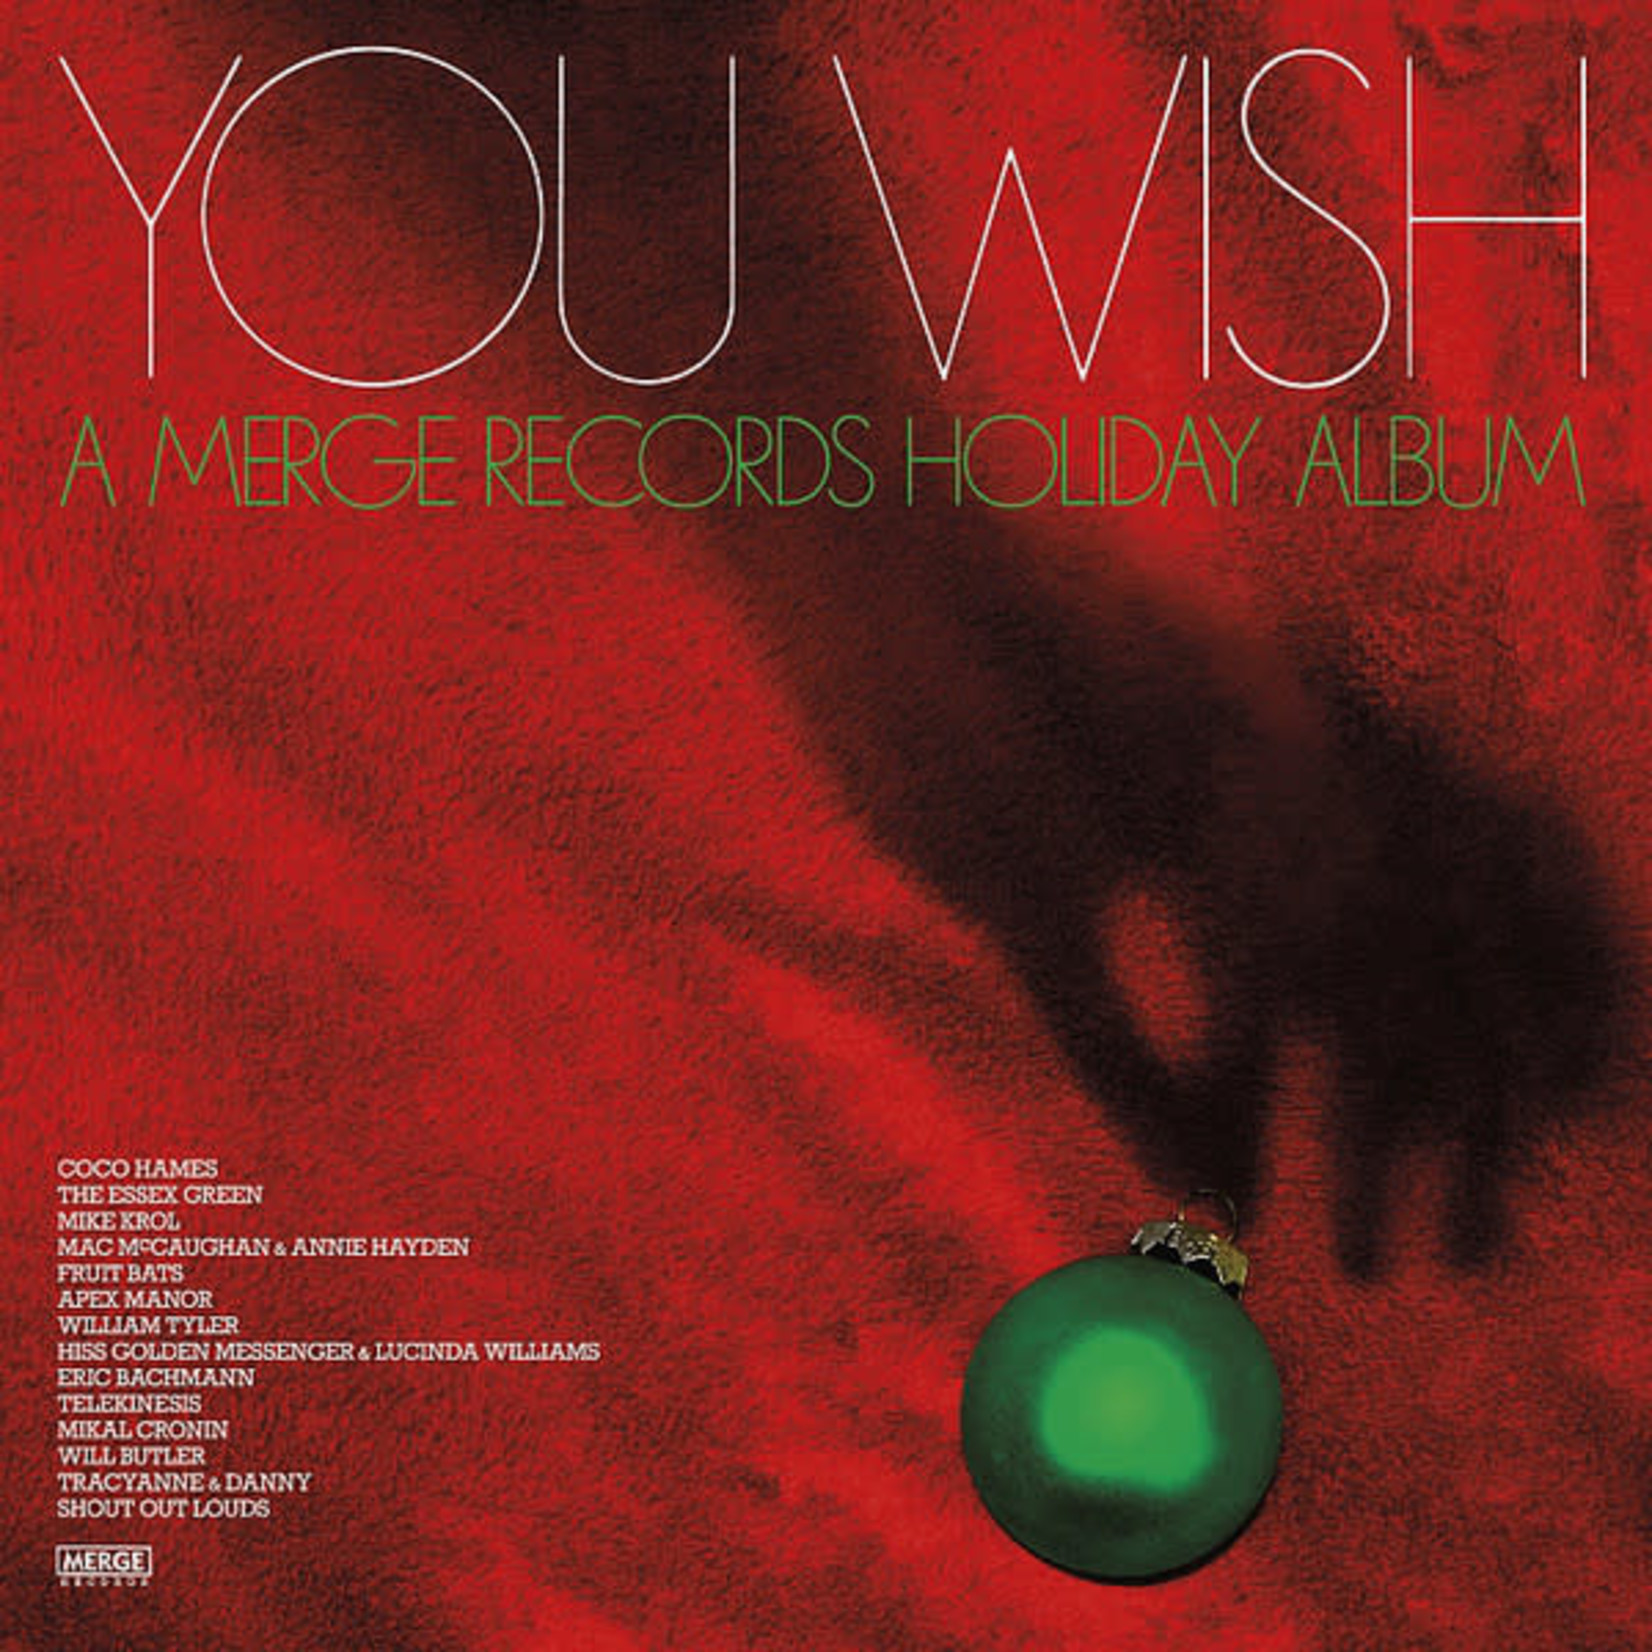 Merge V/A - You Wish: A Merge Records Holiday Album (LP)